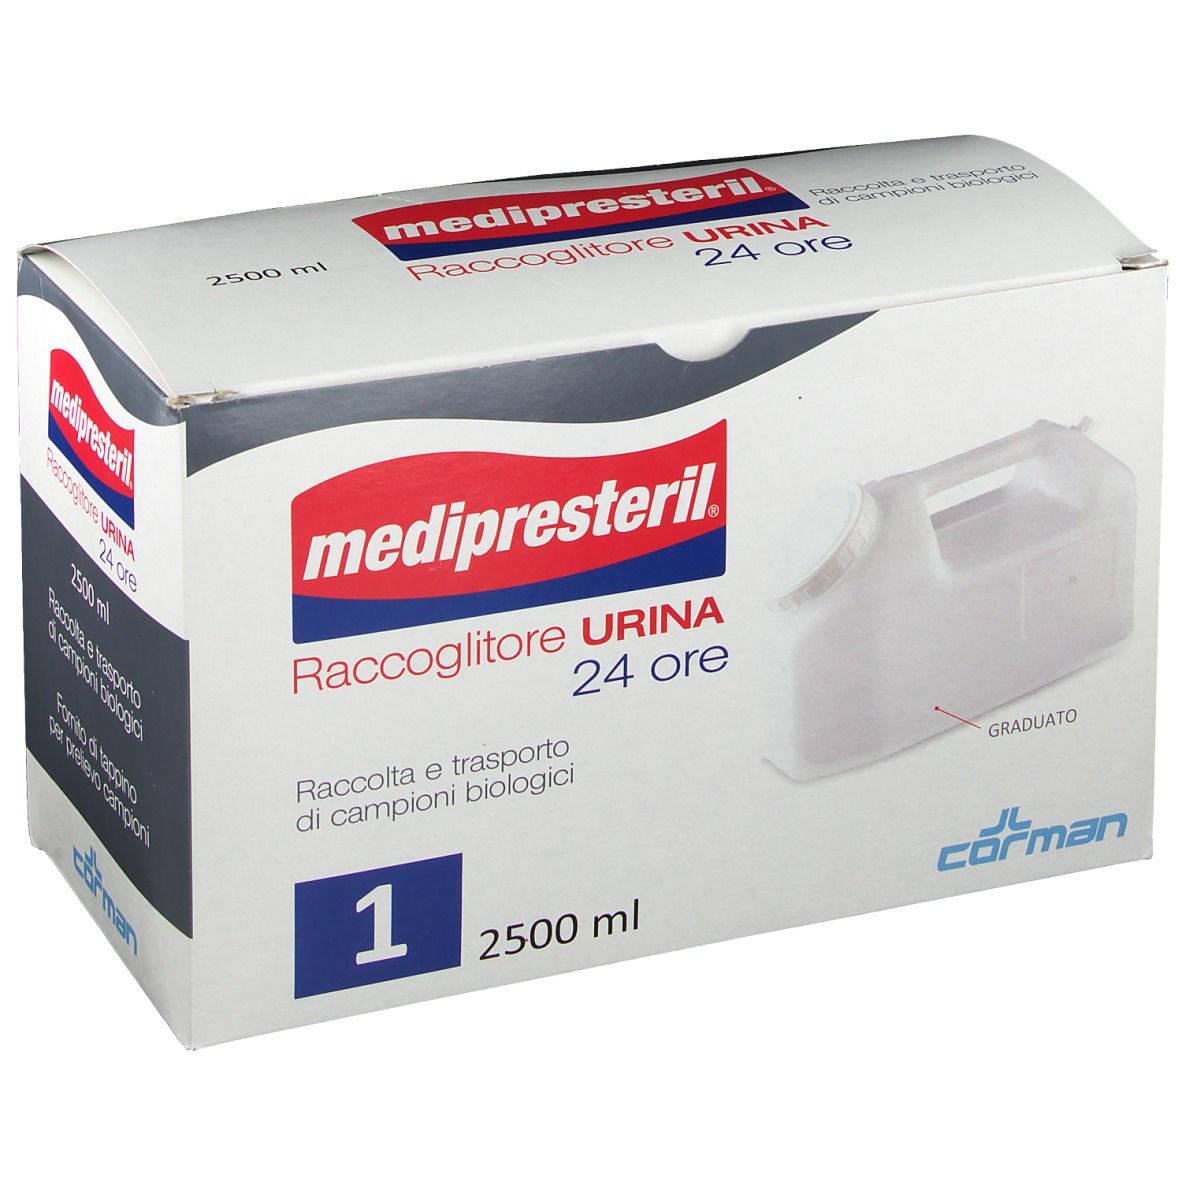 Image of Medipresteril® Raccoglitore Urina 24 ore